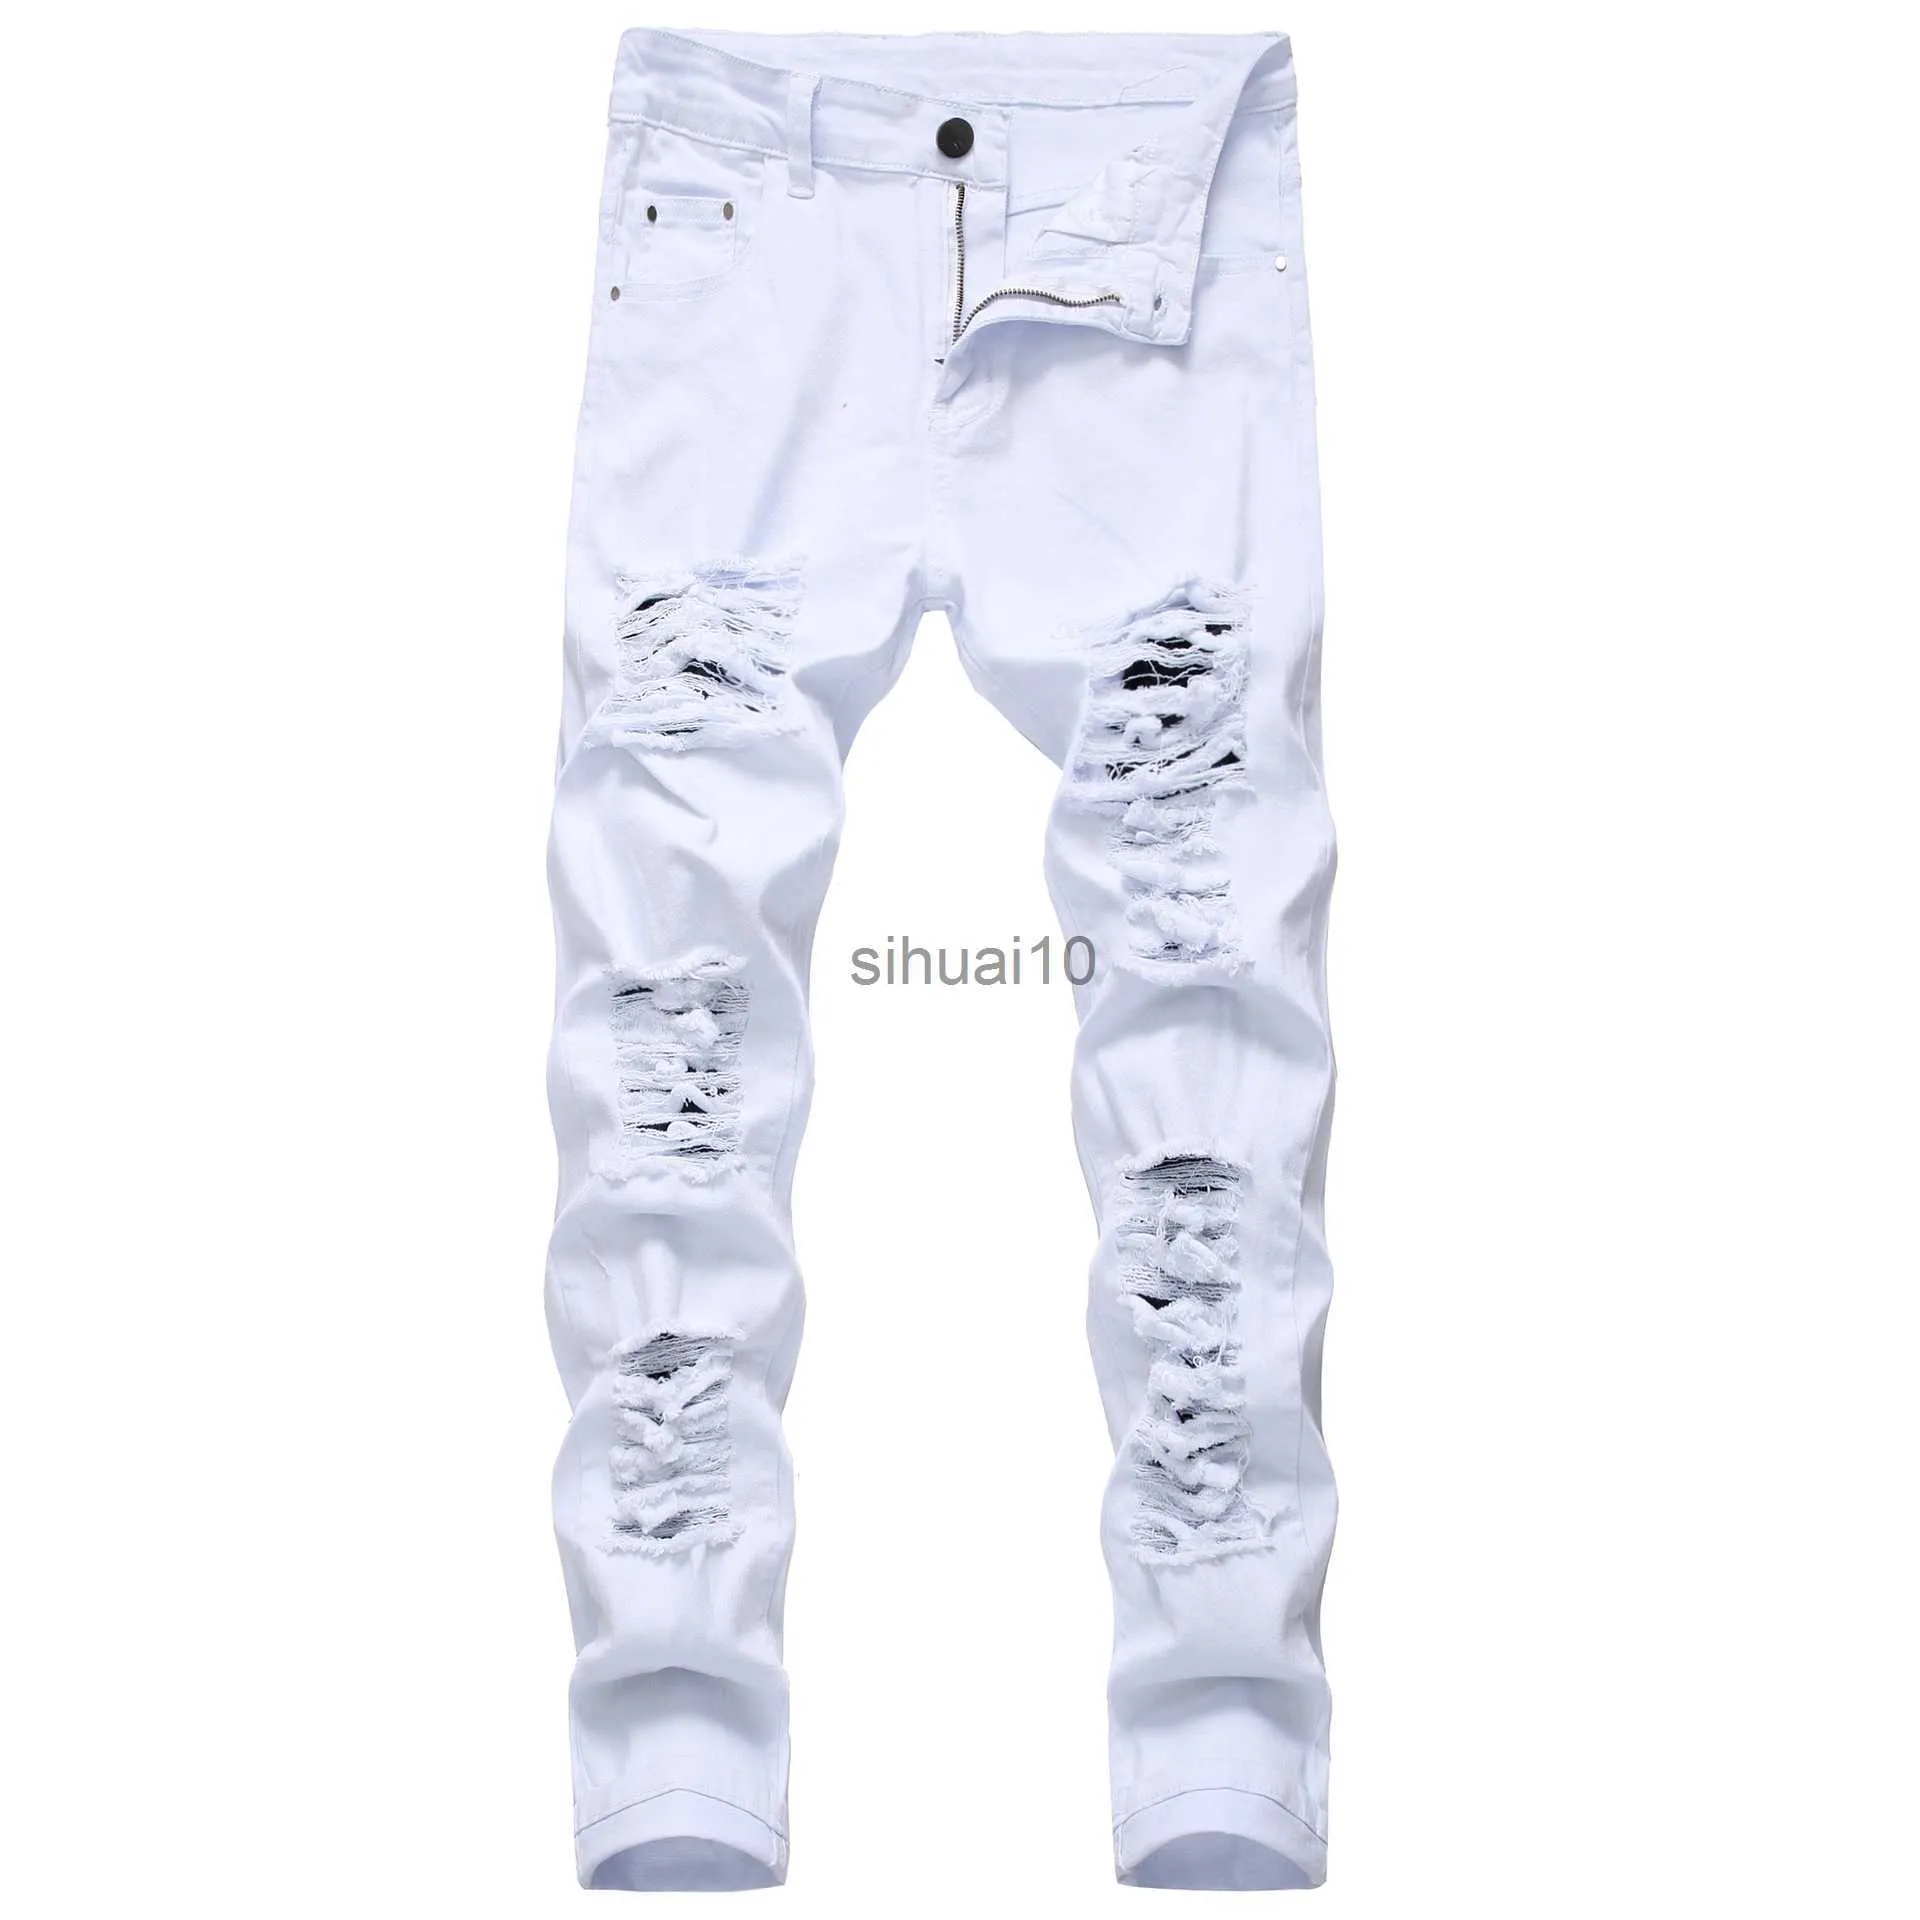 Men's Jeans New Arrival Men's Cotton Ripped Hole Jeans Casual Slim Skinny White Jeans Men Trousers Fashion Stretch Hip Hop Denim Pants Male J230728